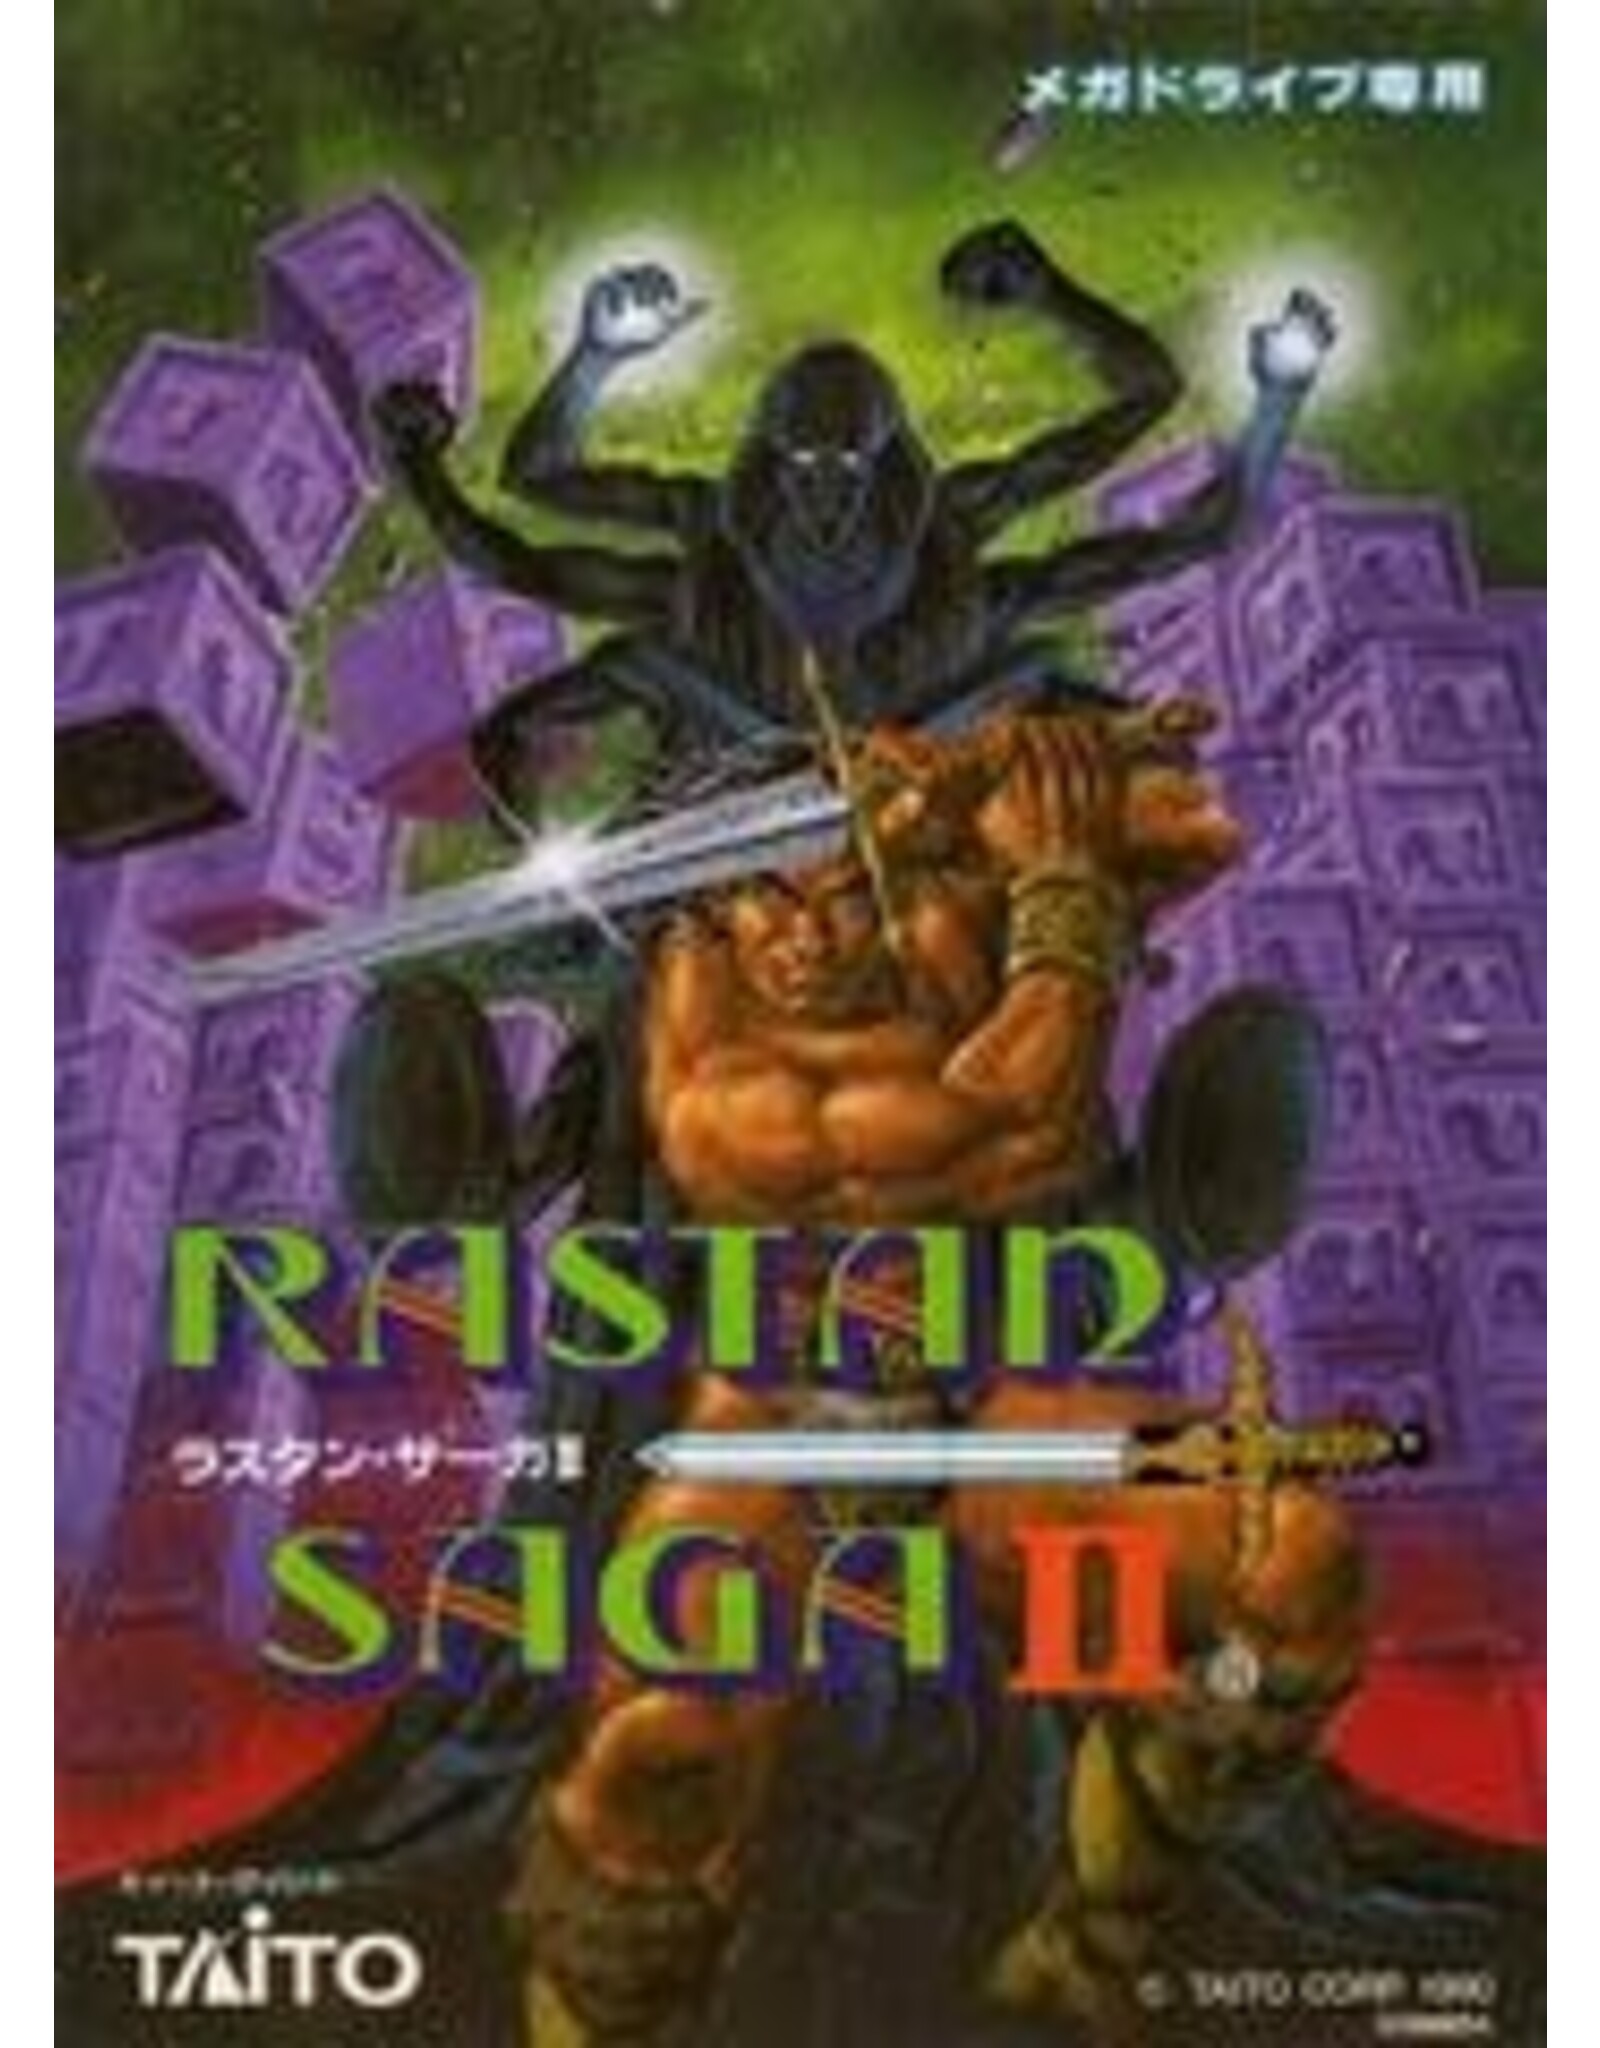 Sega Mega Drive Rastan Saga II (CiB)